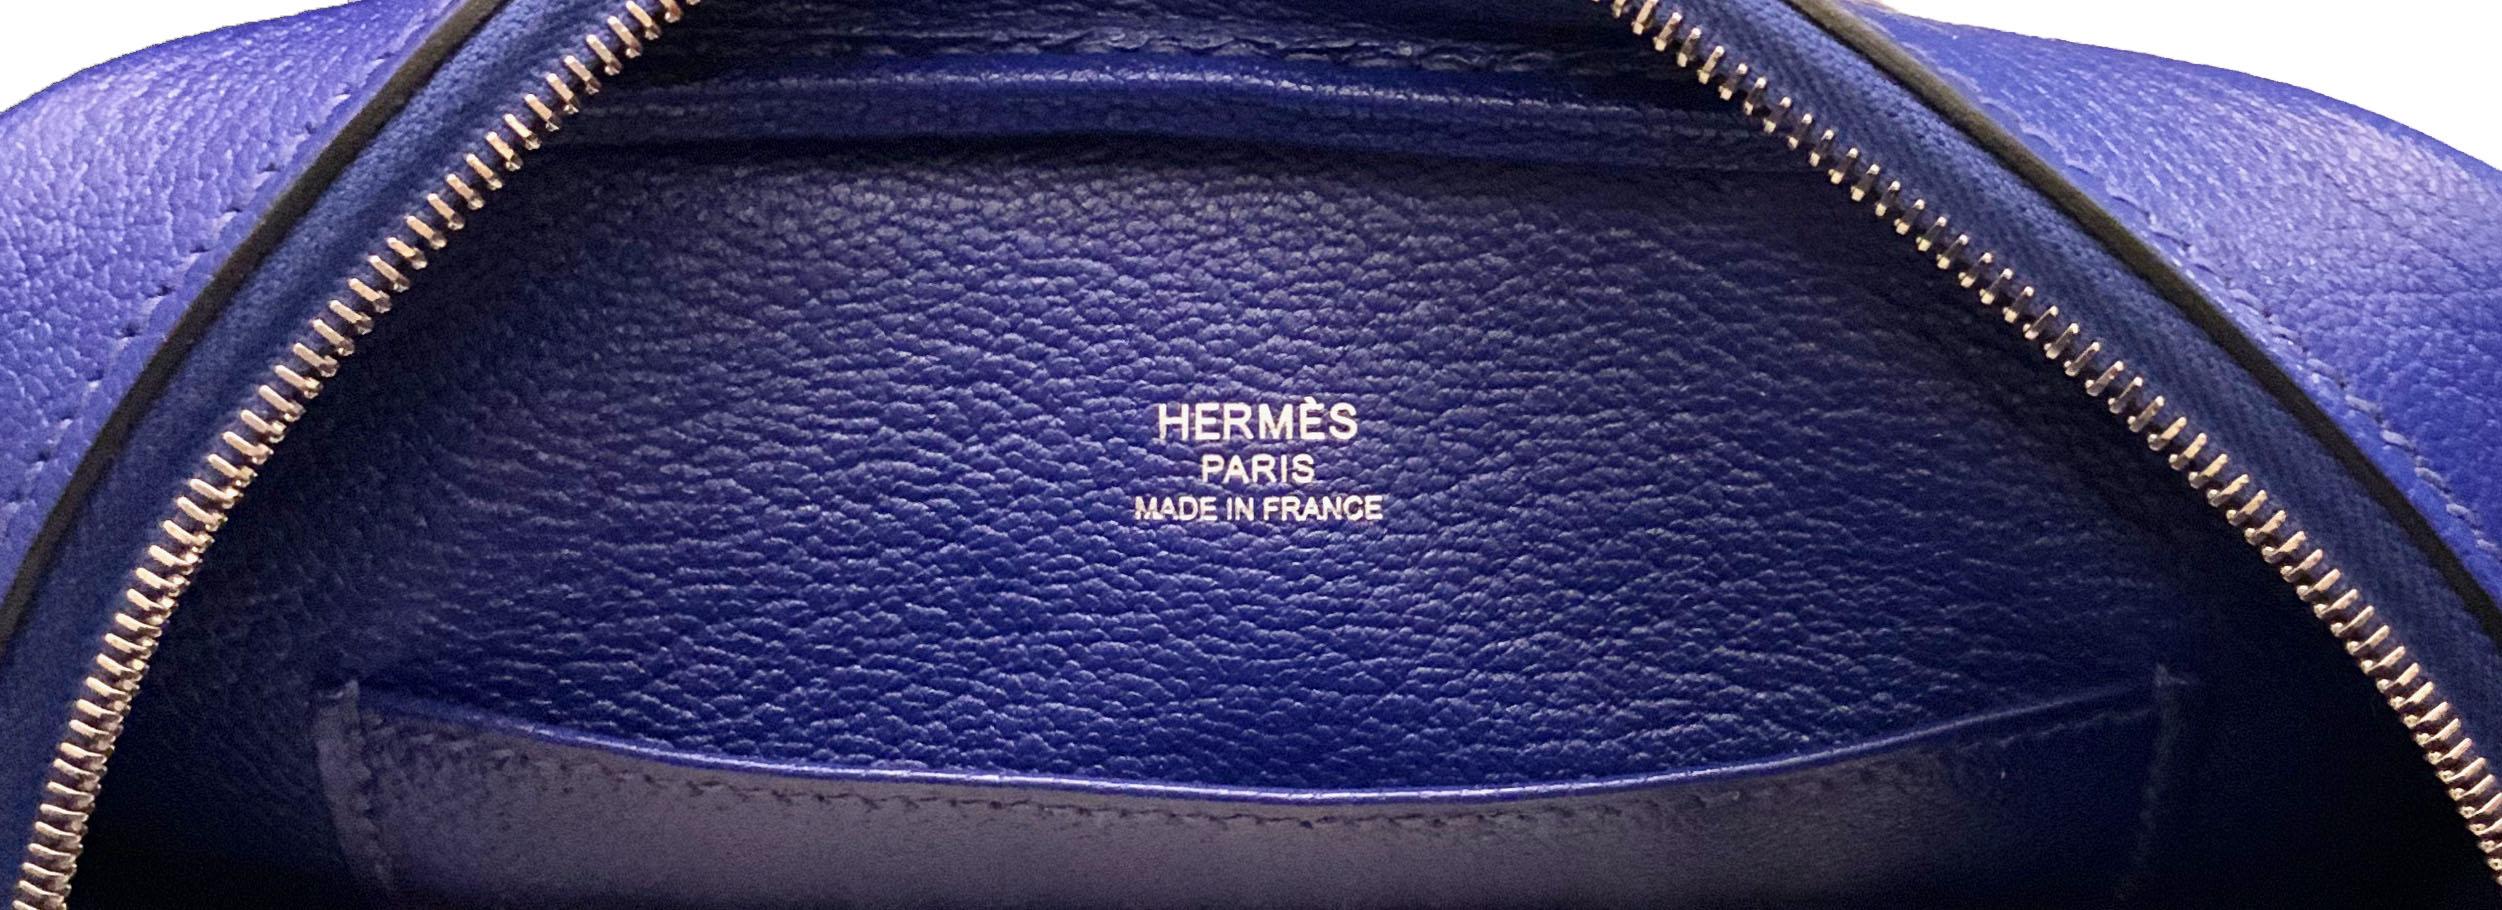 Women's or Men's Hermes Plume II Mini Bag with Hermes Cavale Canvas Bag Strap